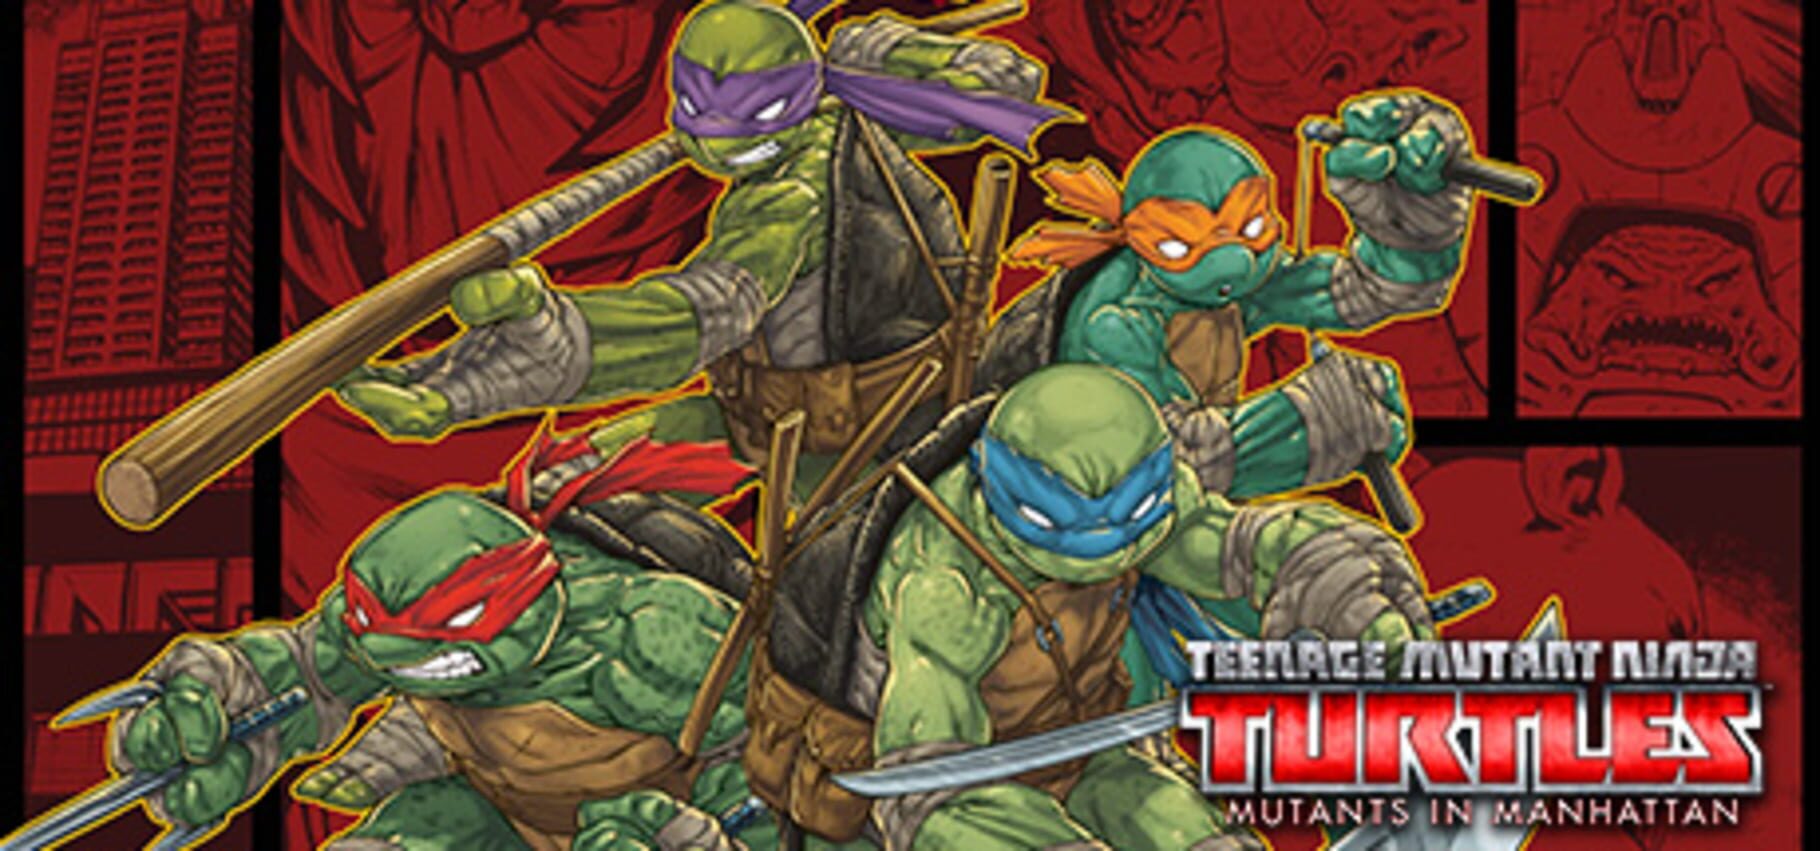 Artwork for Teenage Mutant Ninja Turtles: Mutants in Manhattan